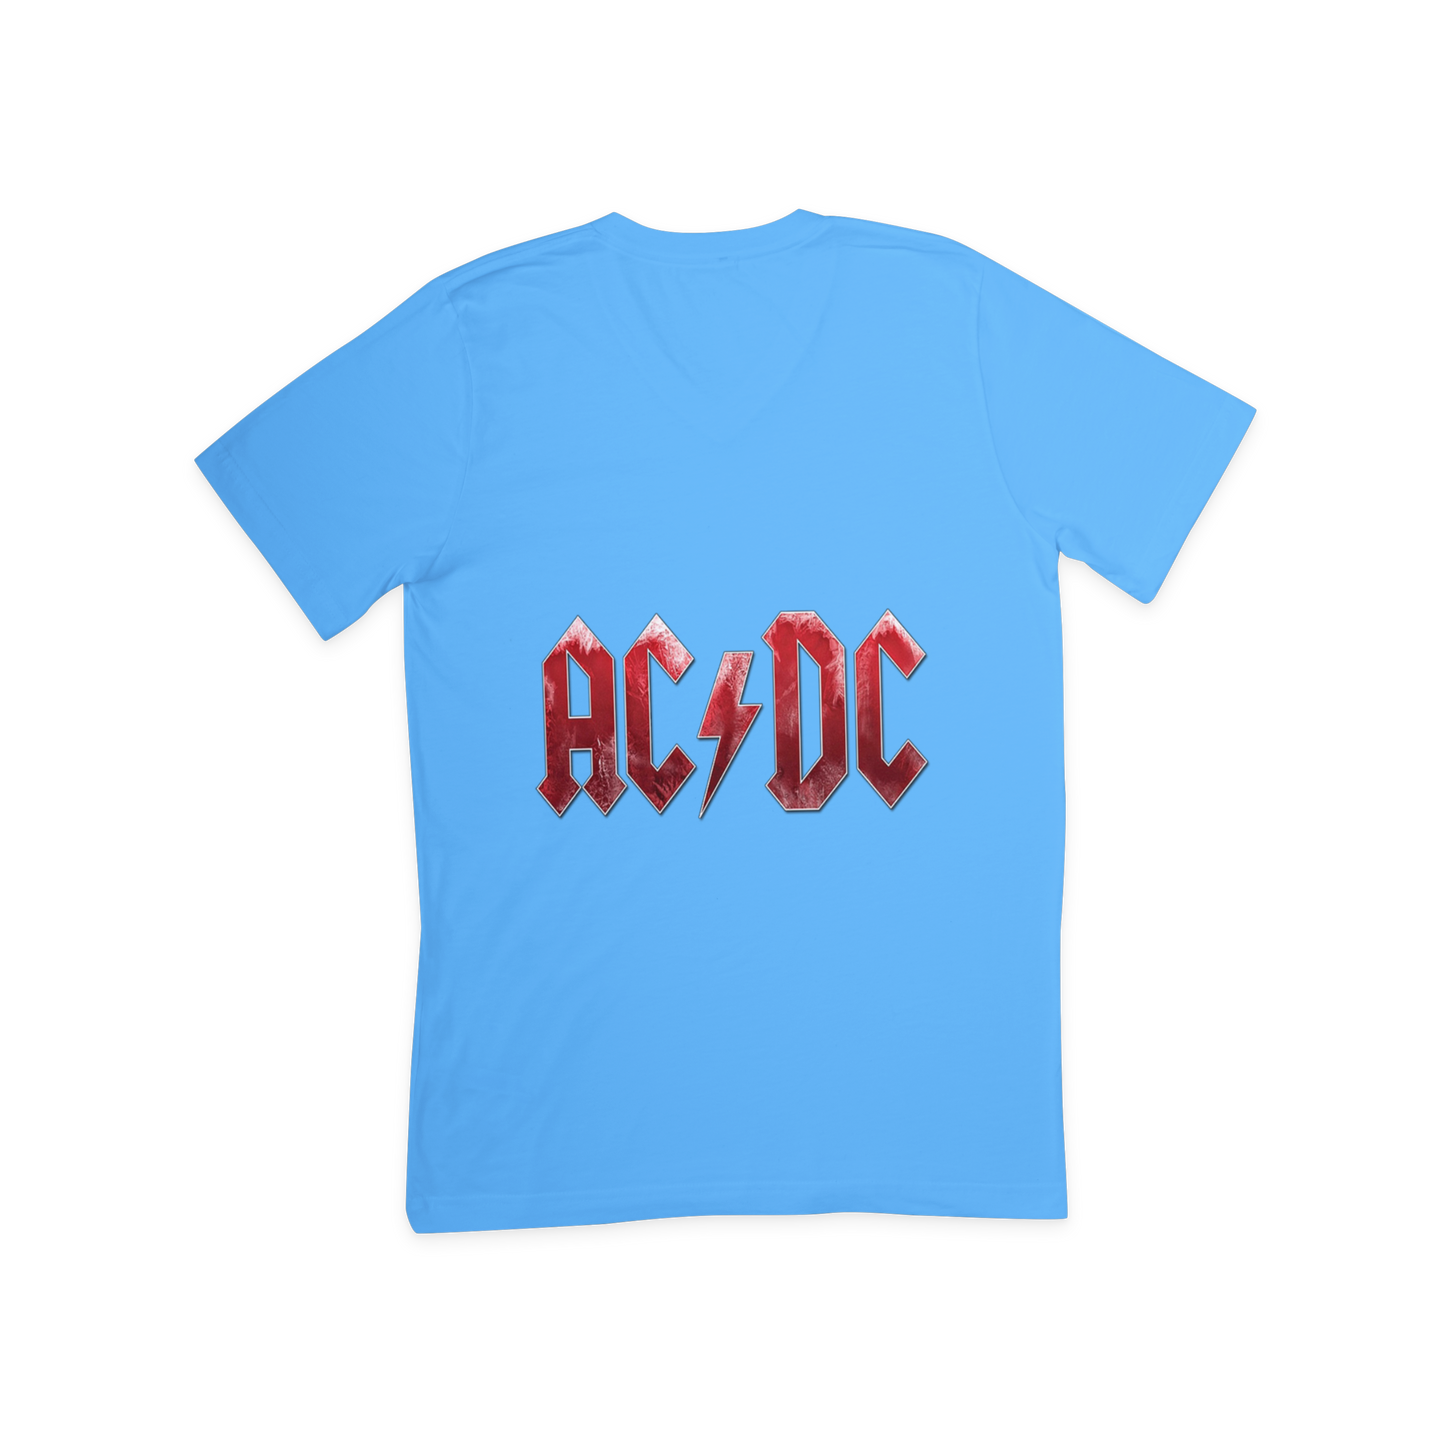 AC & DC design T shirt (RED)